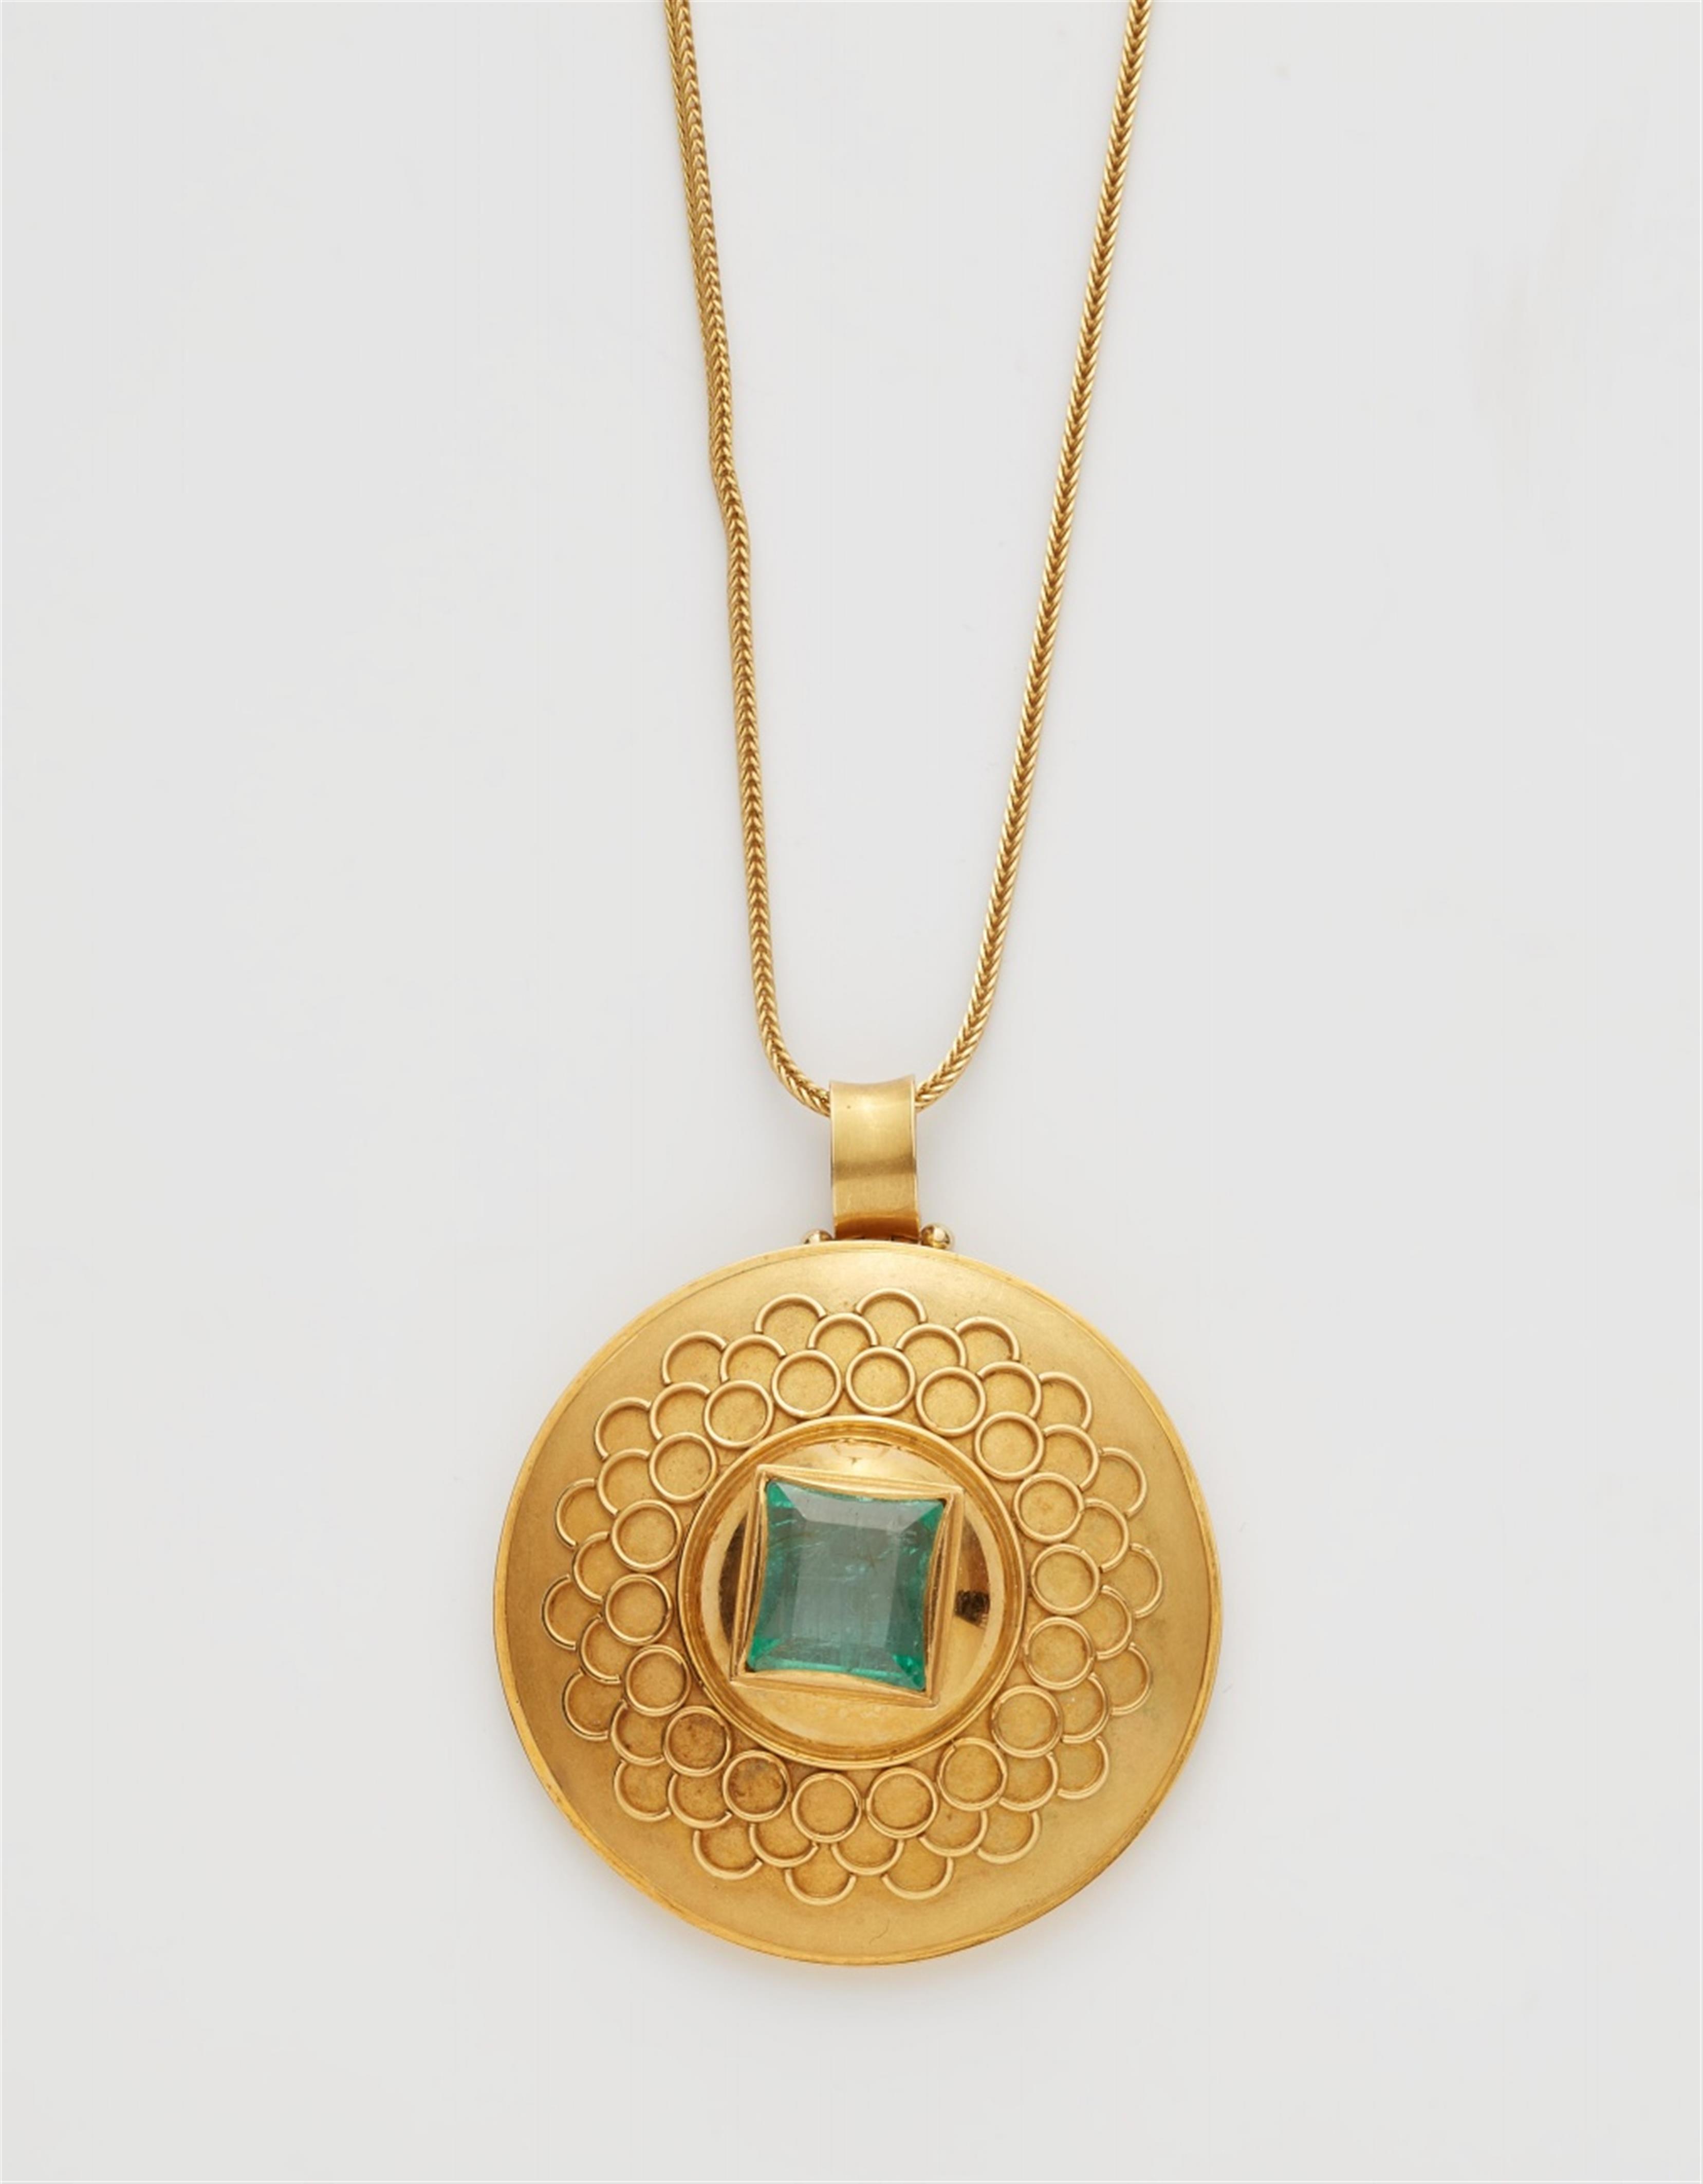 An 18k gold emerald pendant - image-1